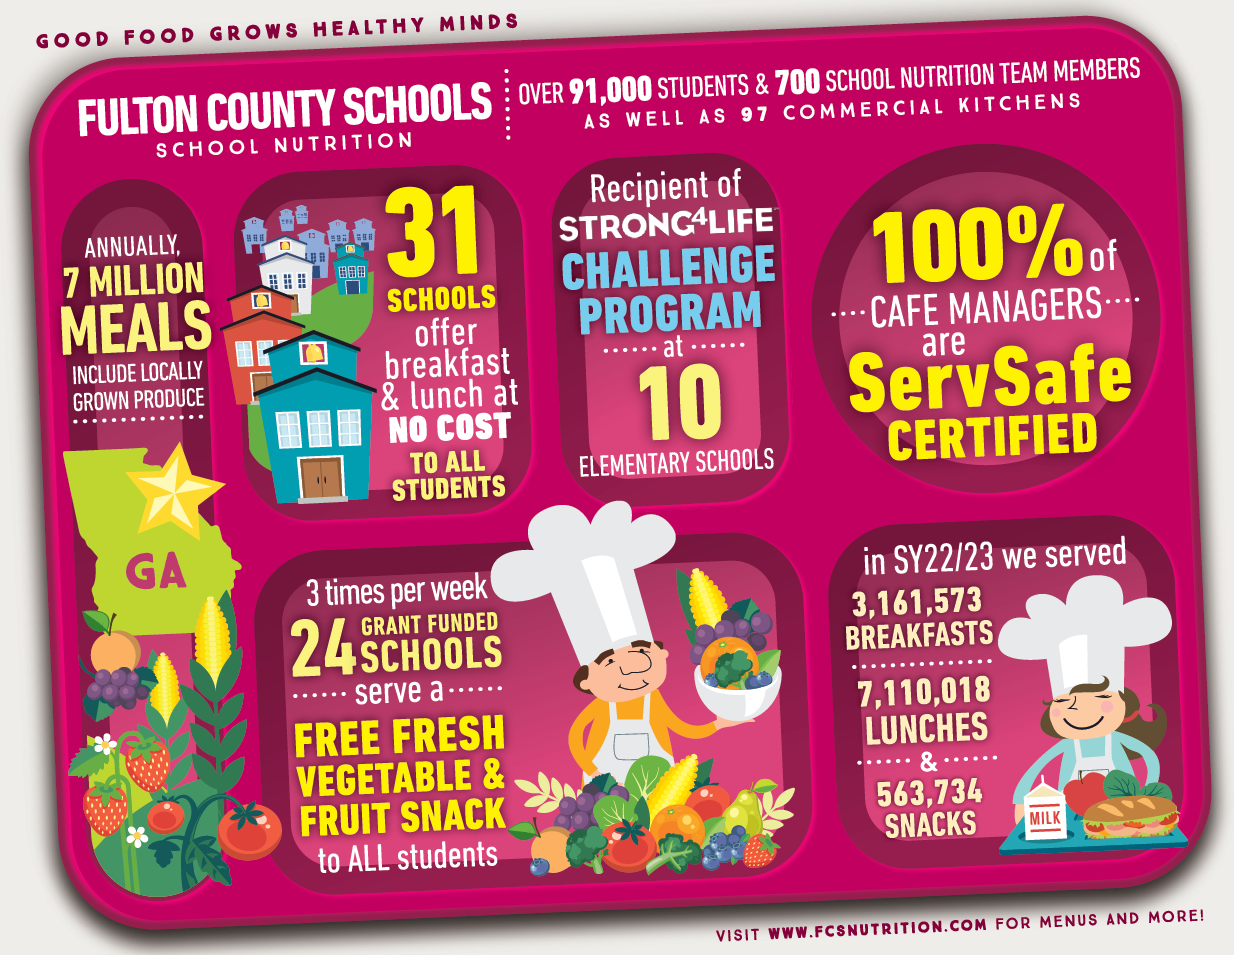 Fulton County School Nutrition facts